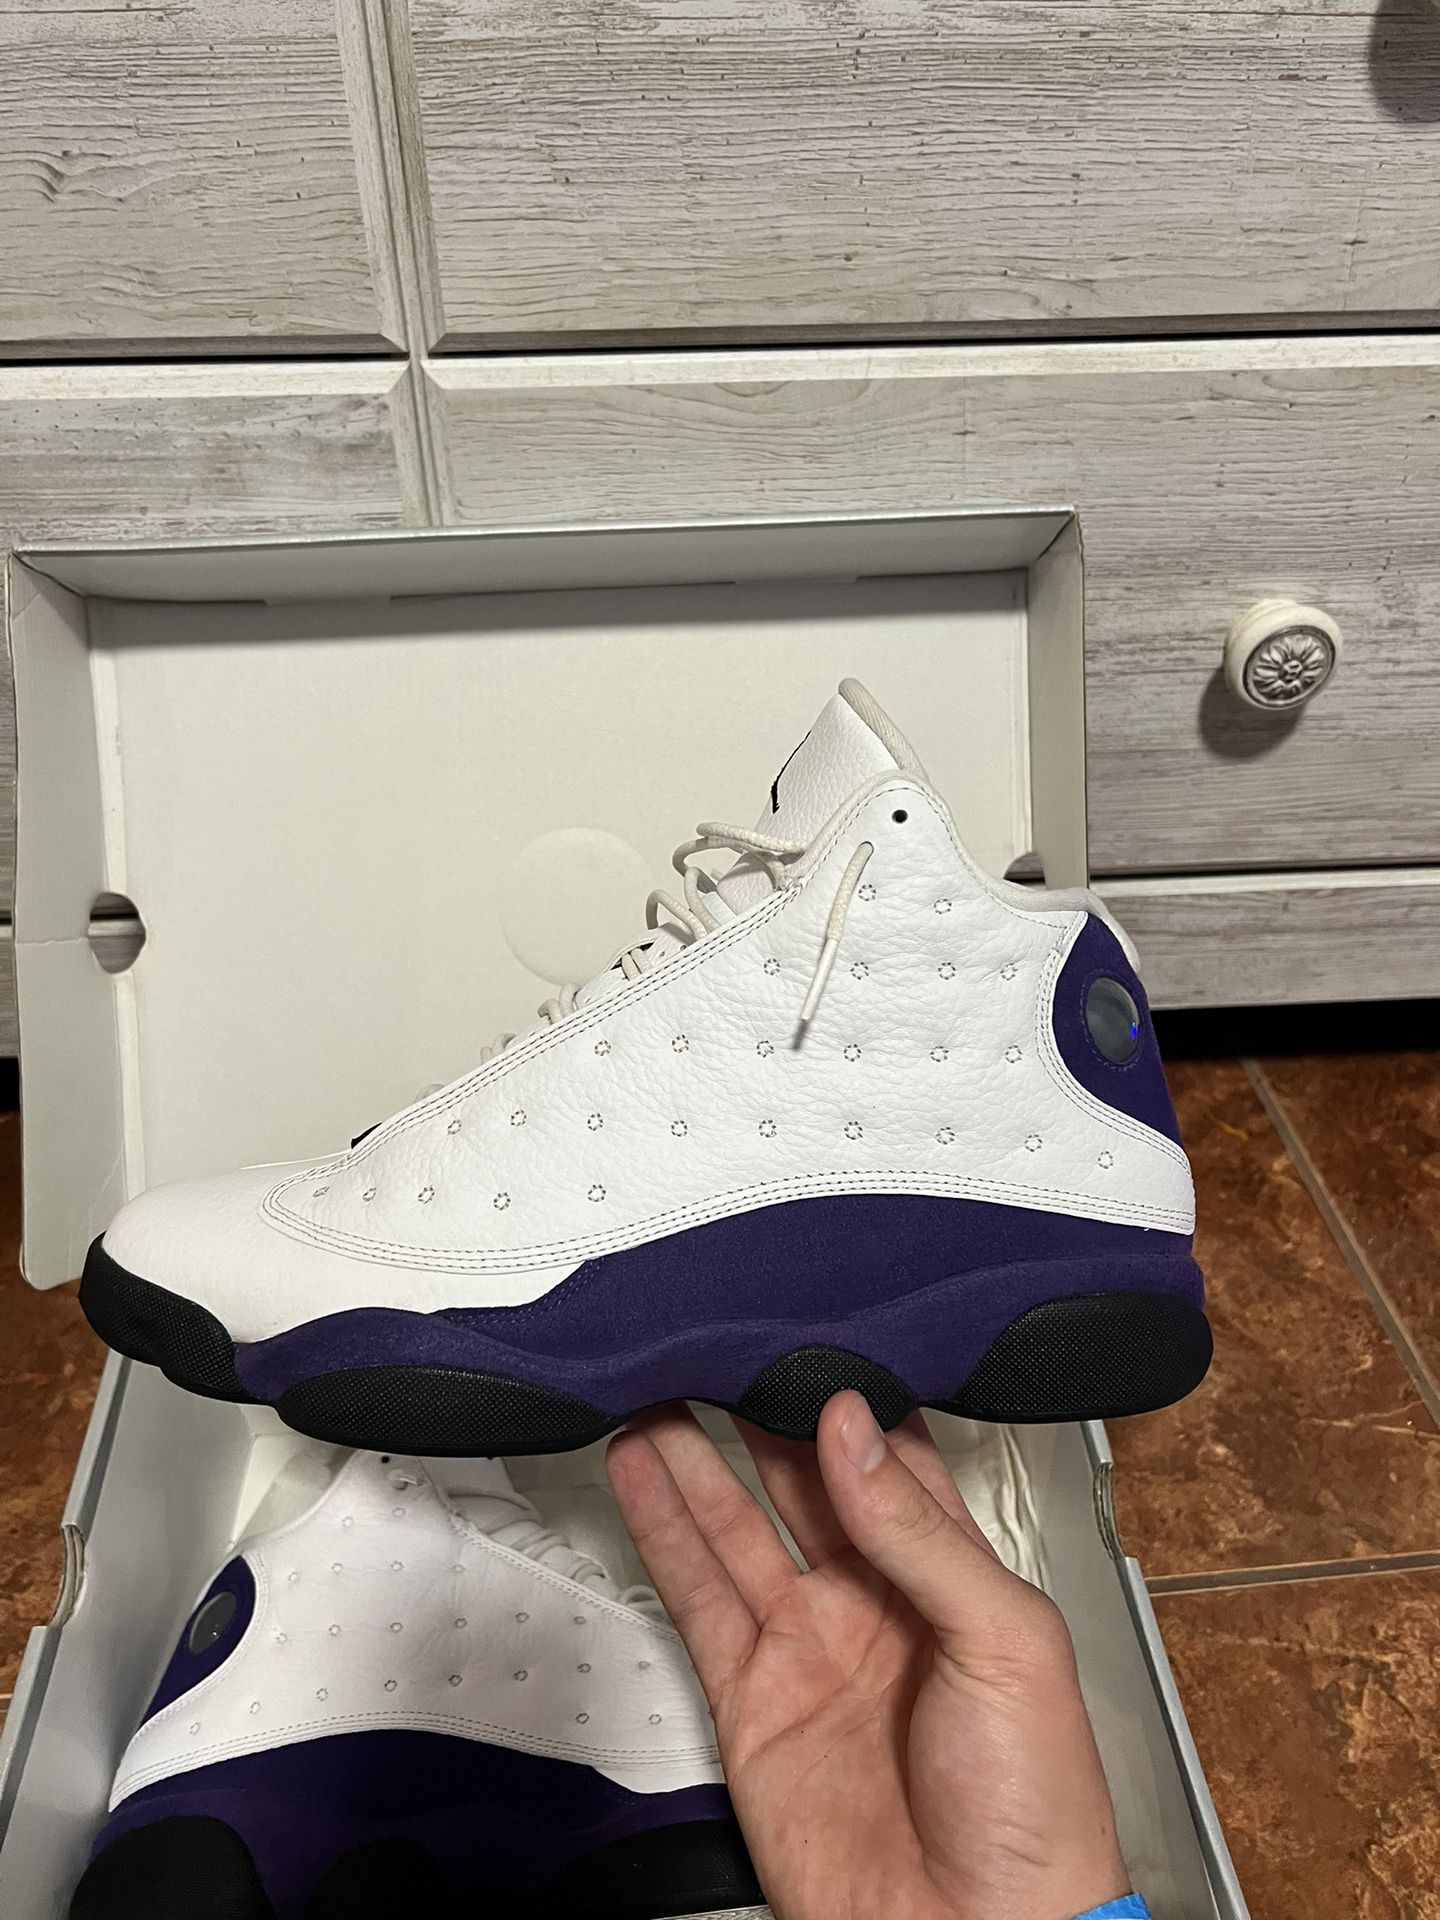 Jordan 13 Lakers Size 11.5 